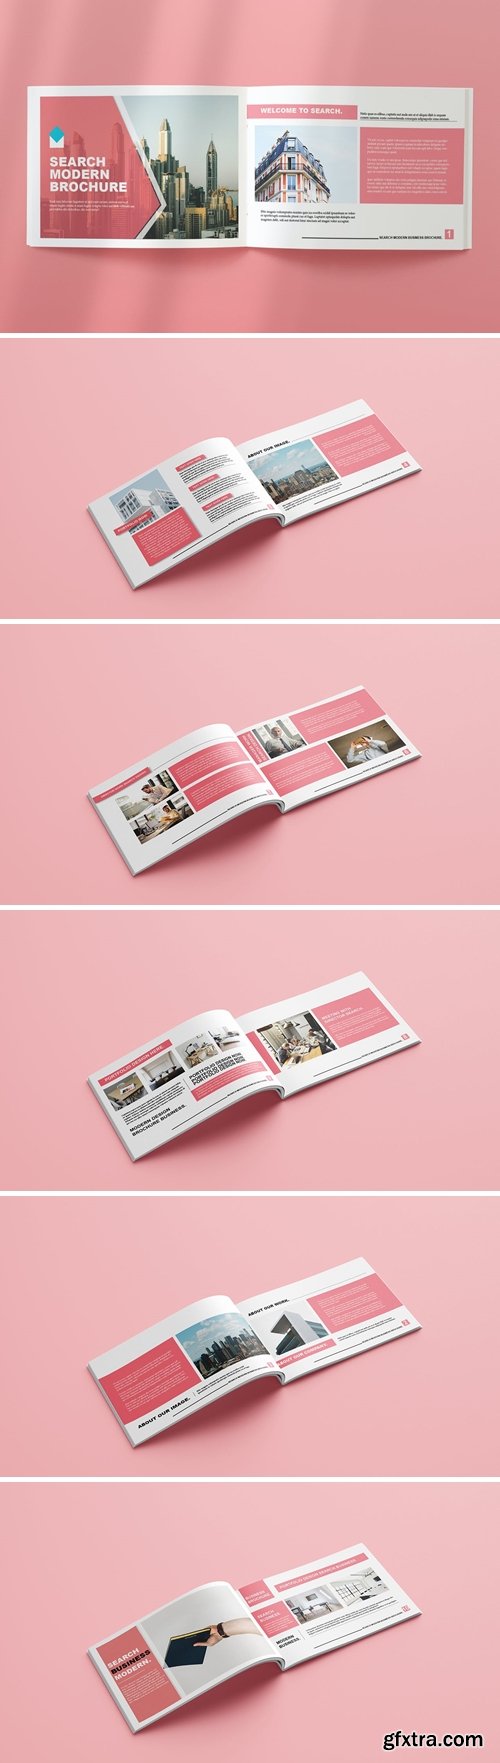 Search Modern Business Brochure - Landscape